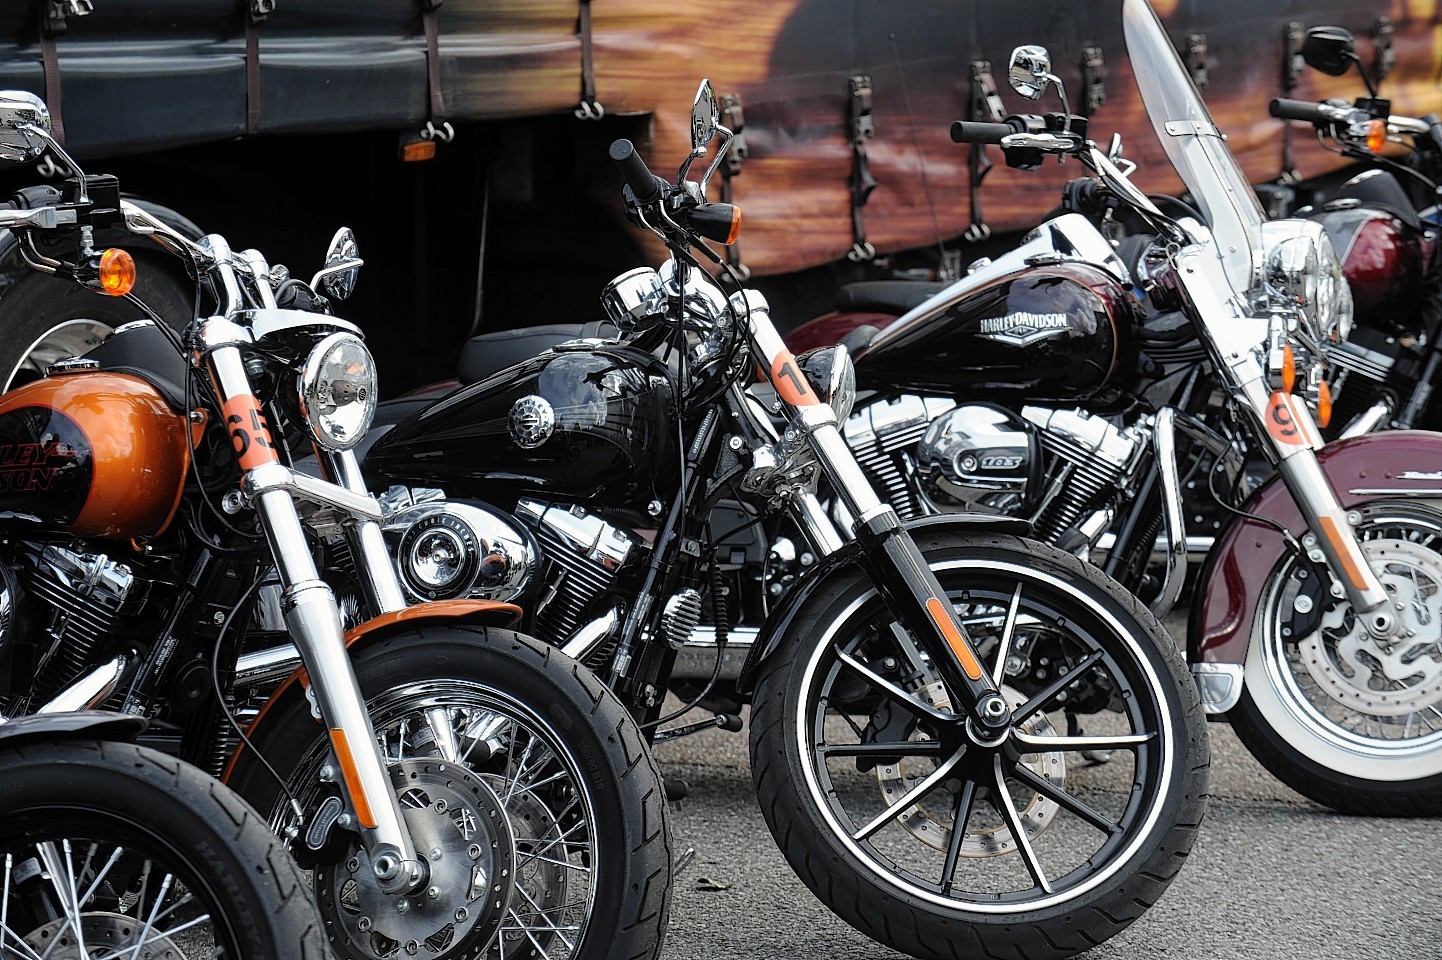 Europe's largest Harley Davidson event